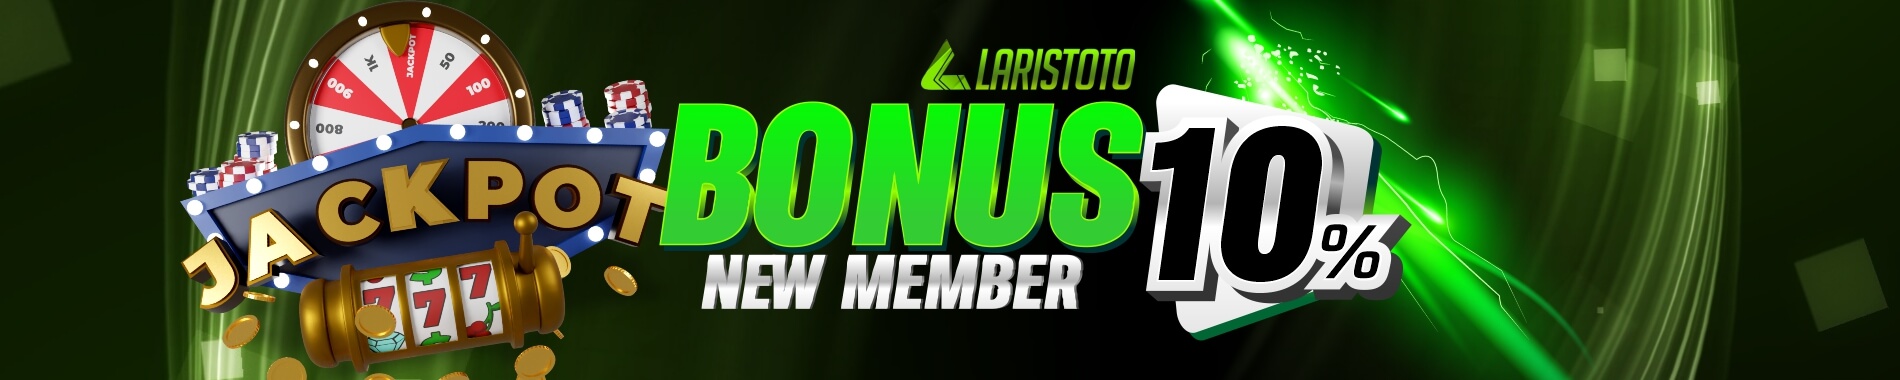 bonus new member 10%